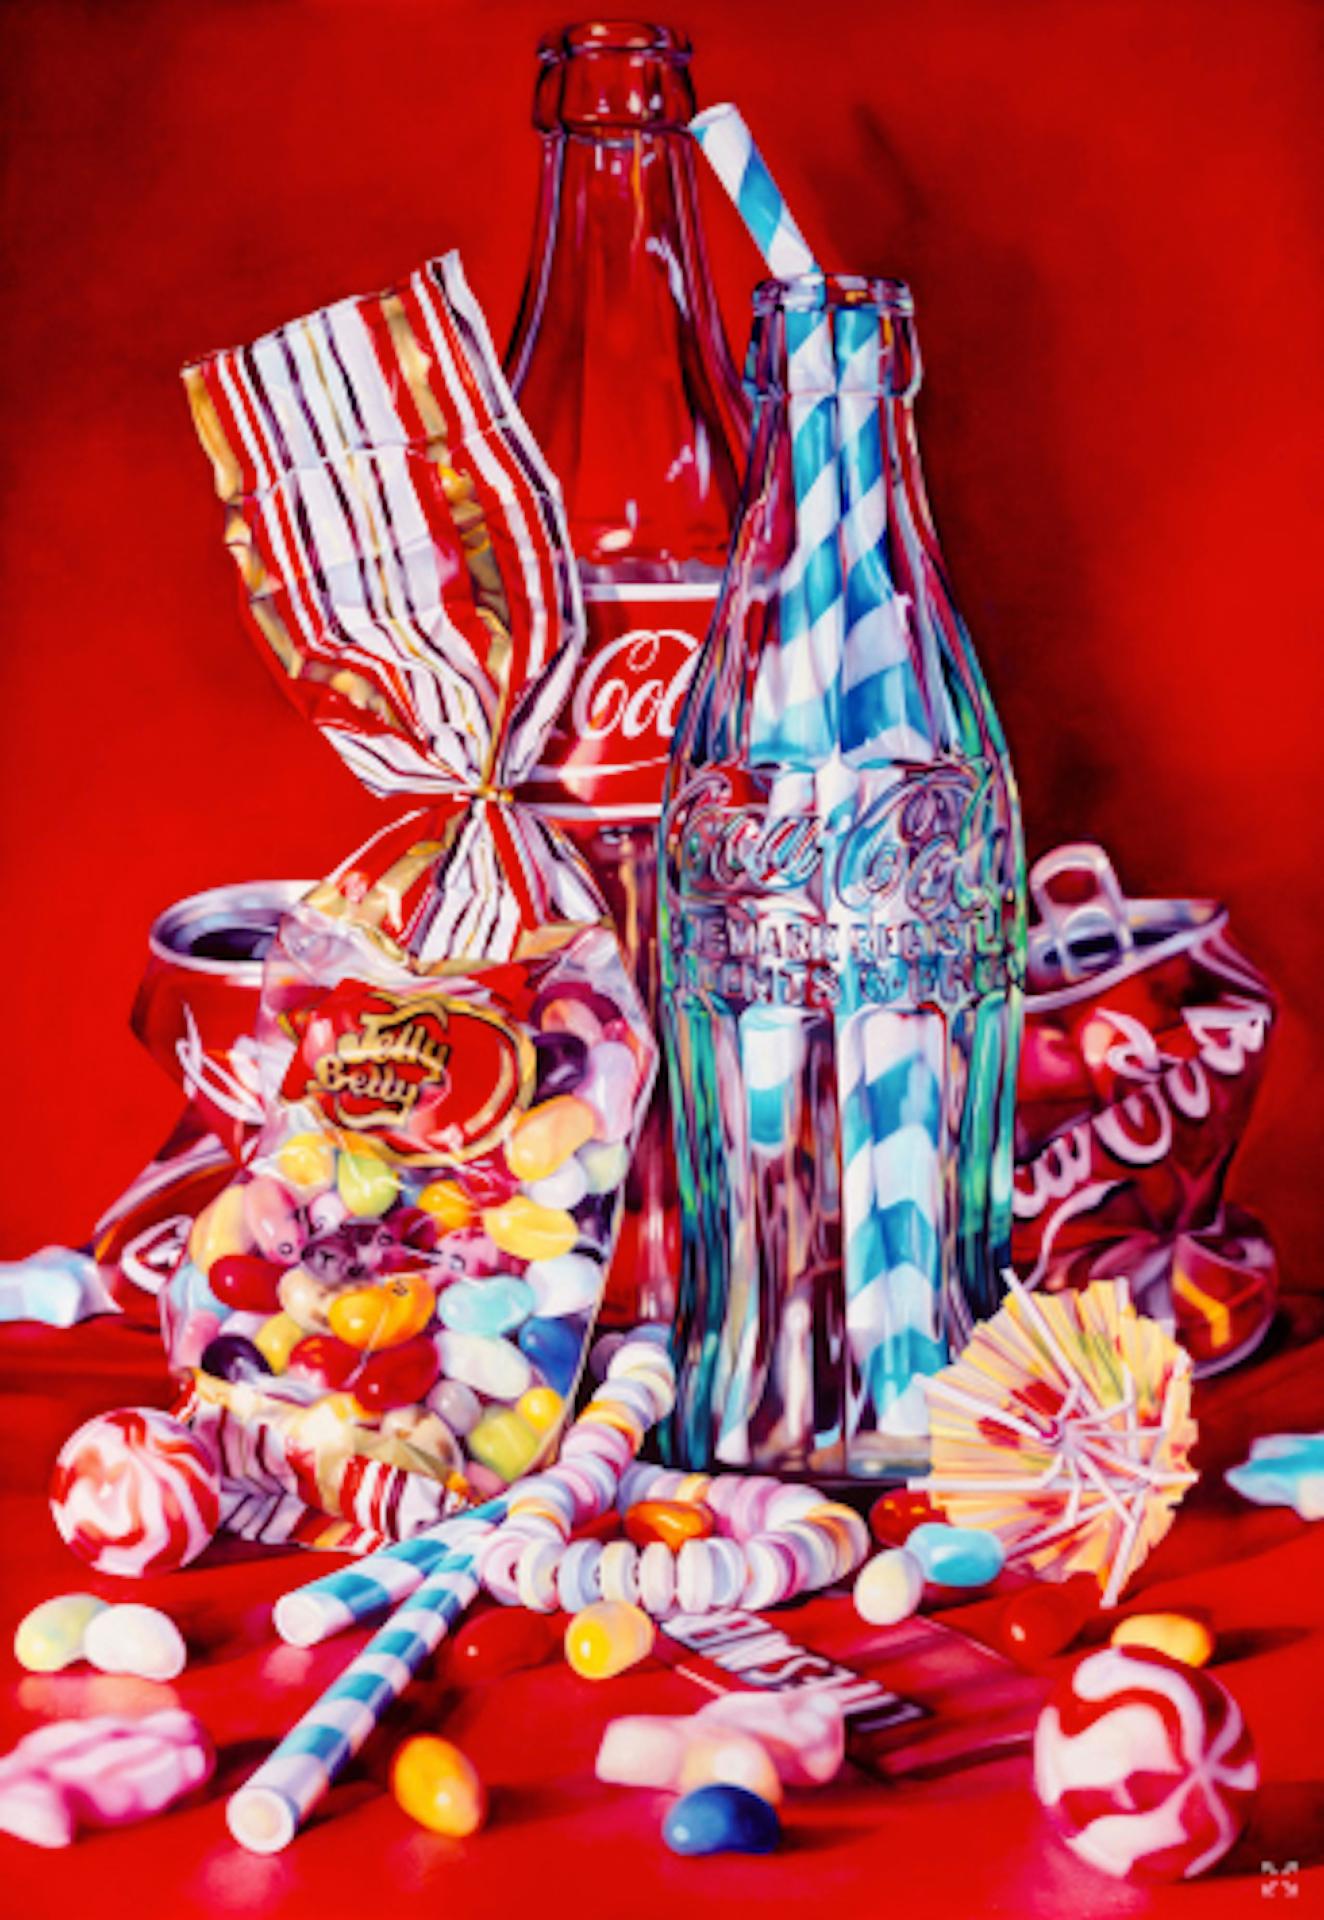 Coke, Jelly Beans and Lifesavers, Kate Brinkworth, Impression contemporaine, Sweet Art